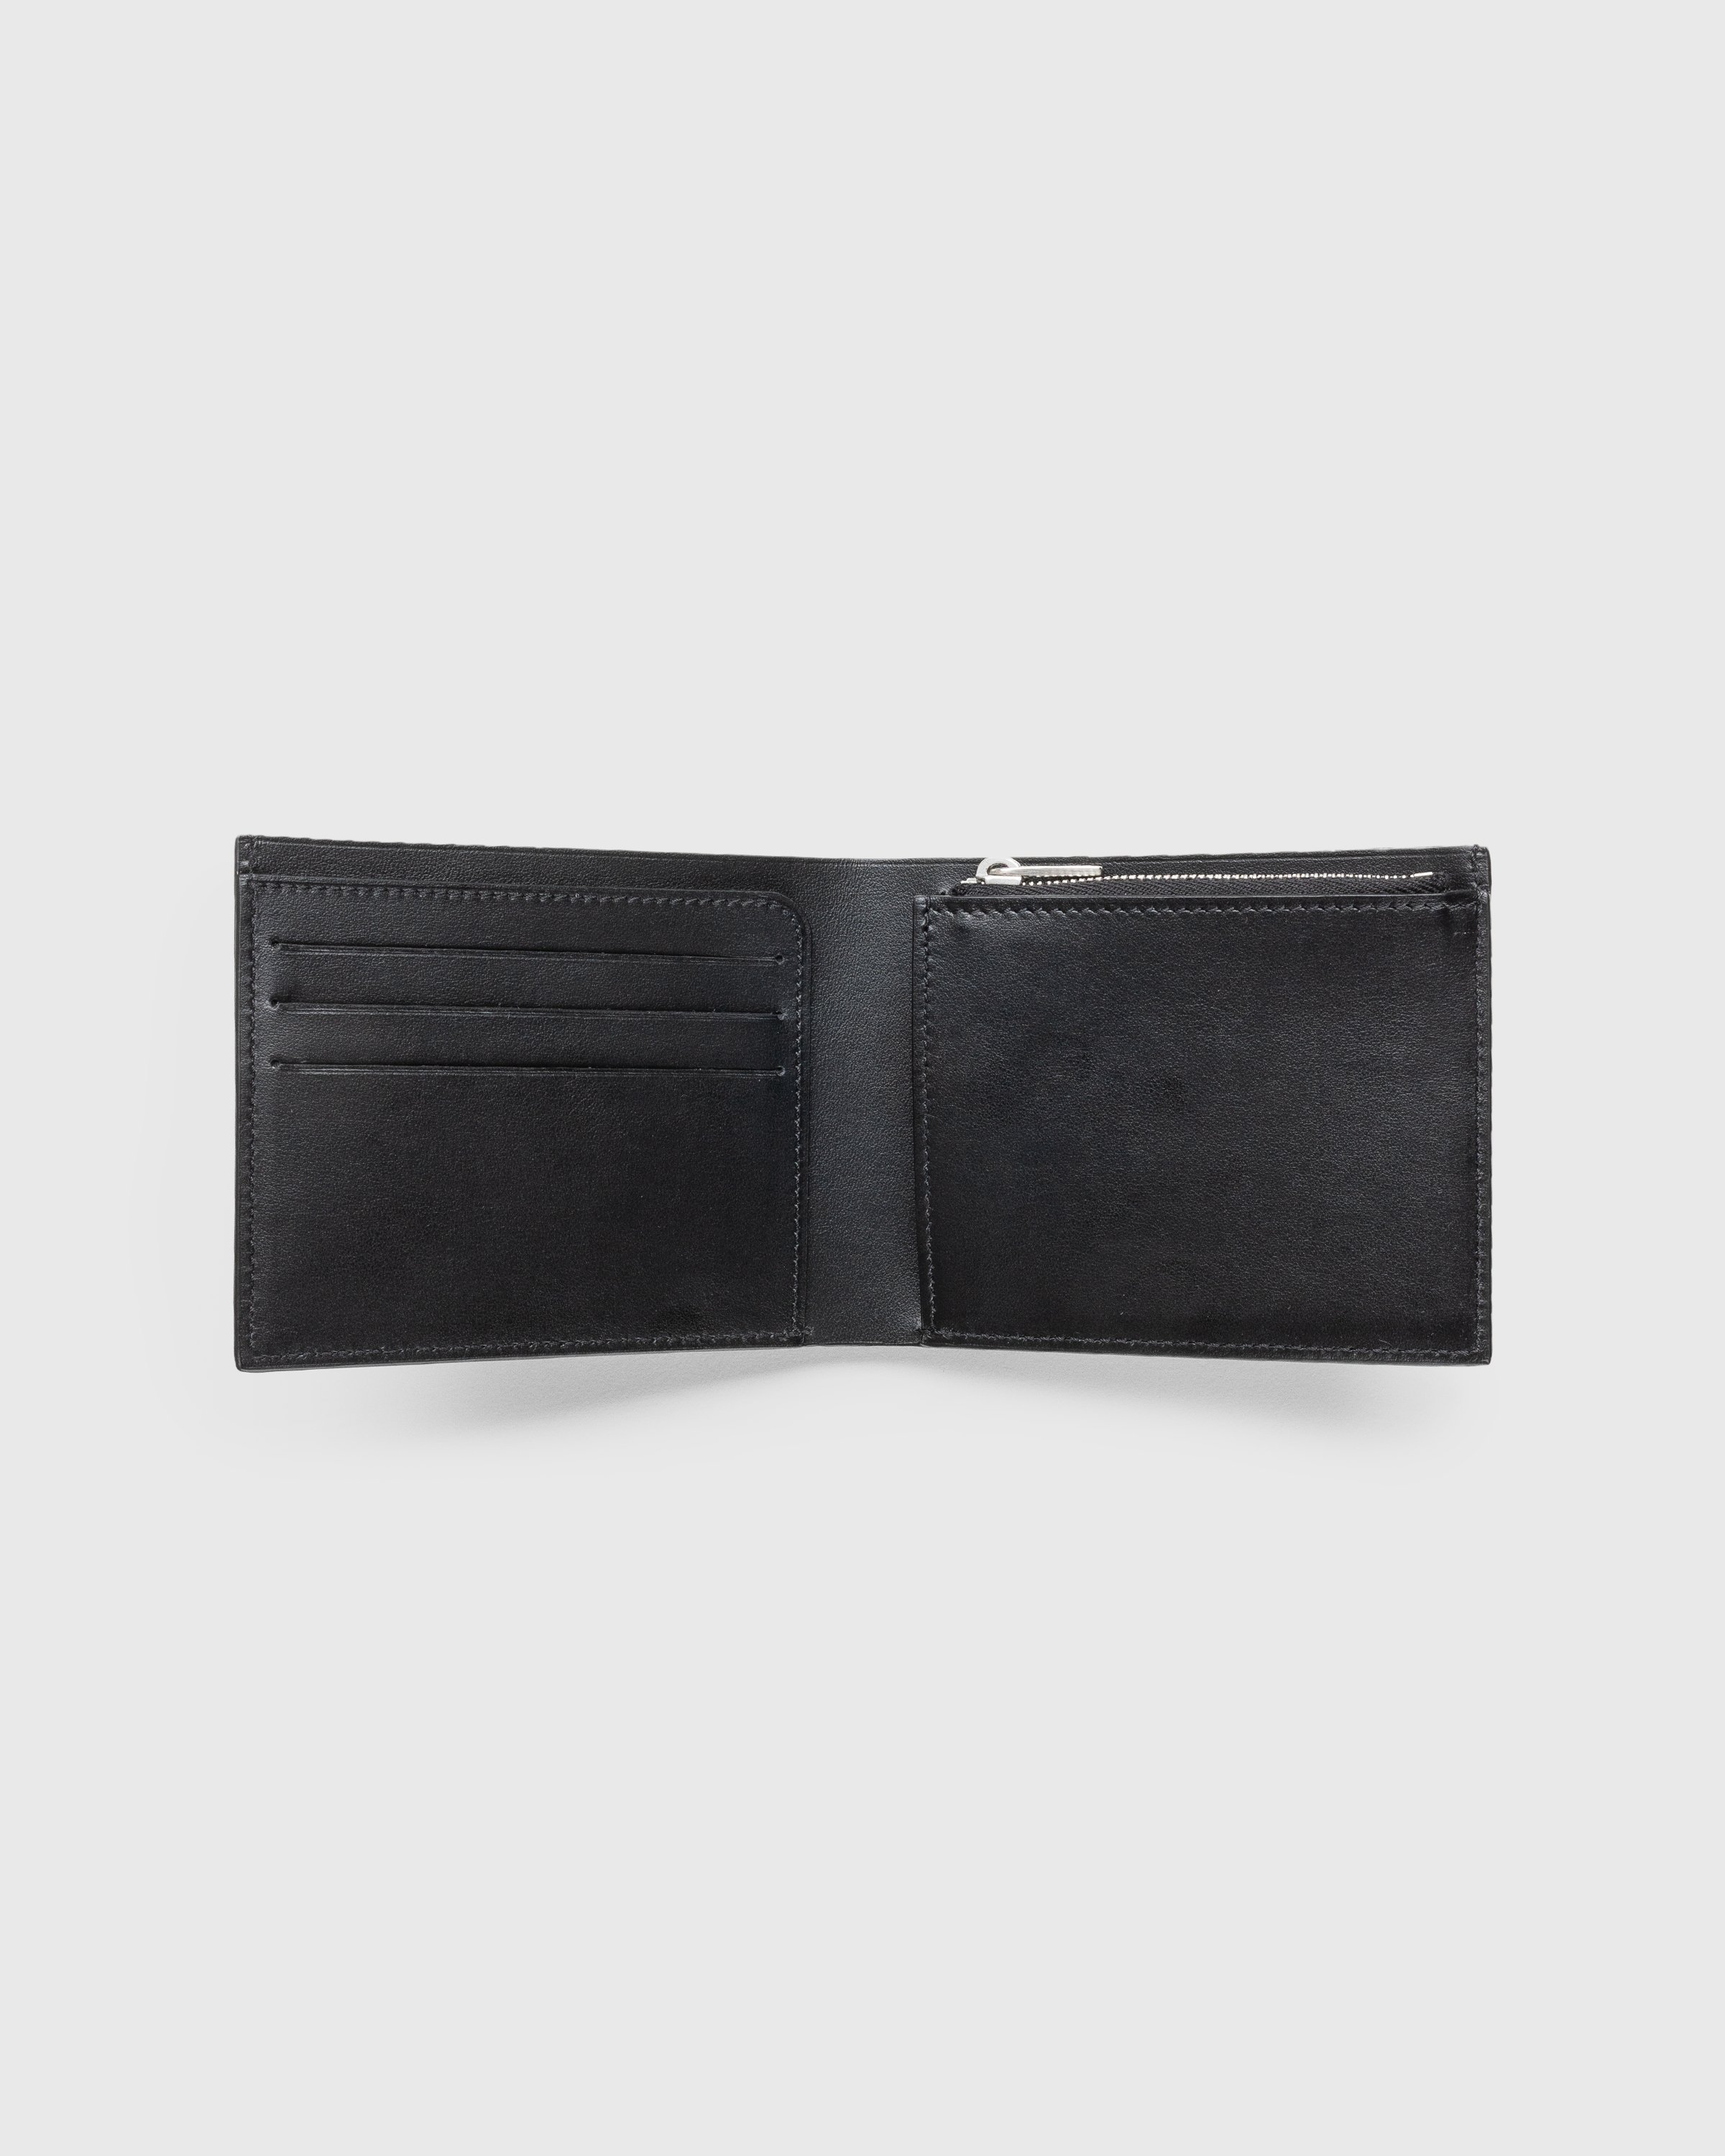 Jil Sander - Zip Pocket Wallet Black - Accessories - Black - Image 3